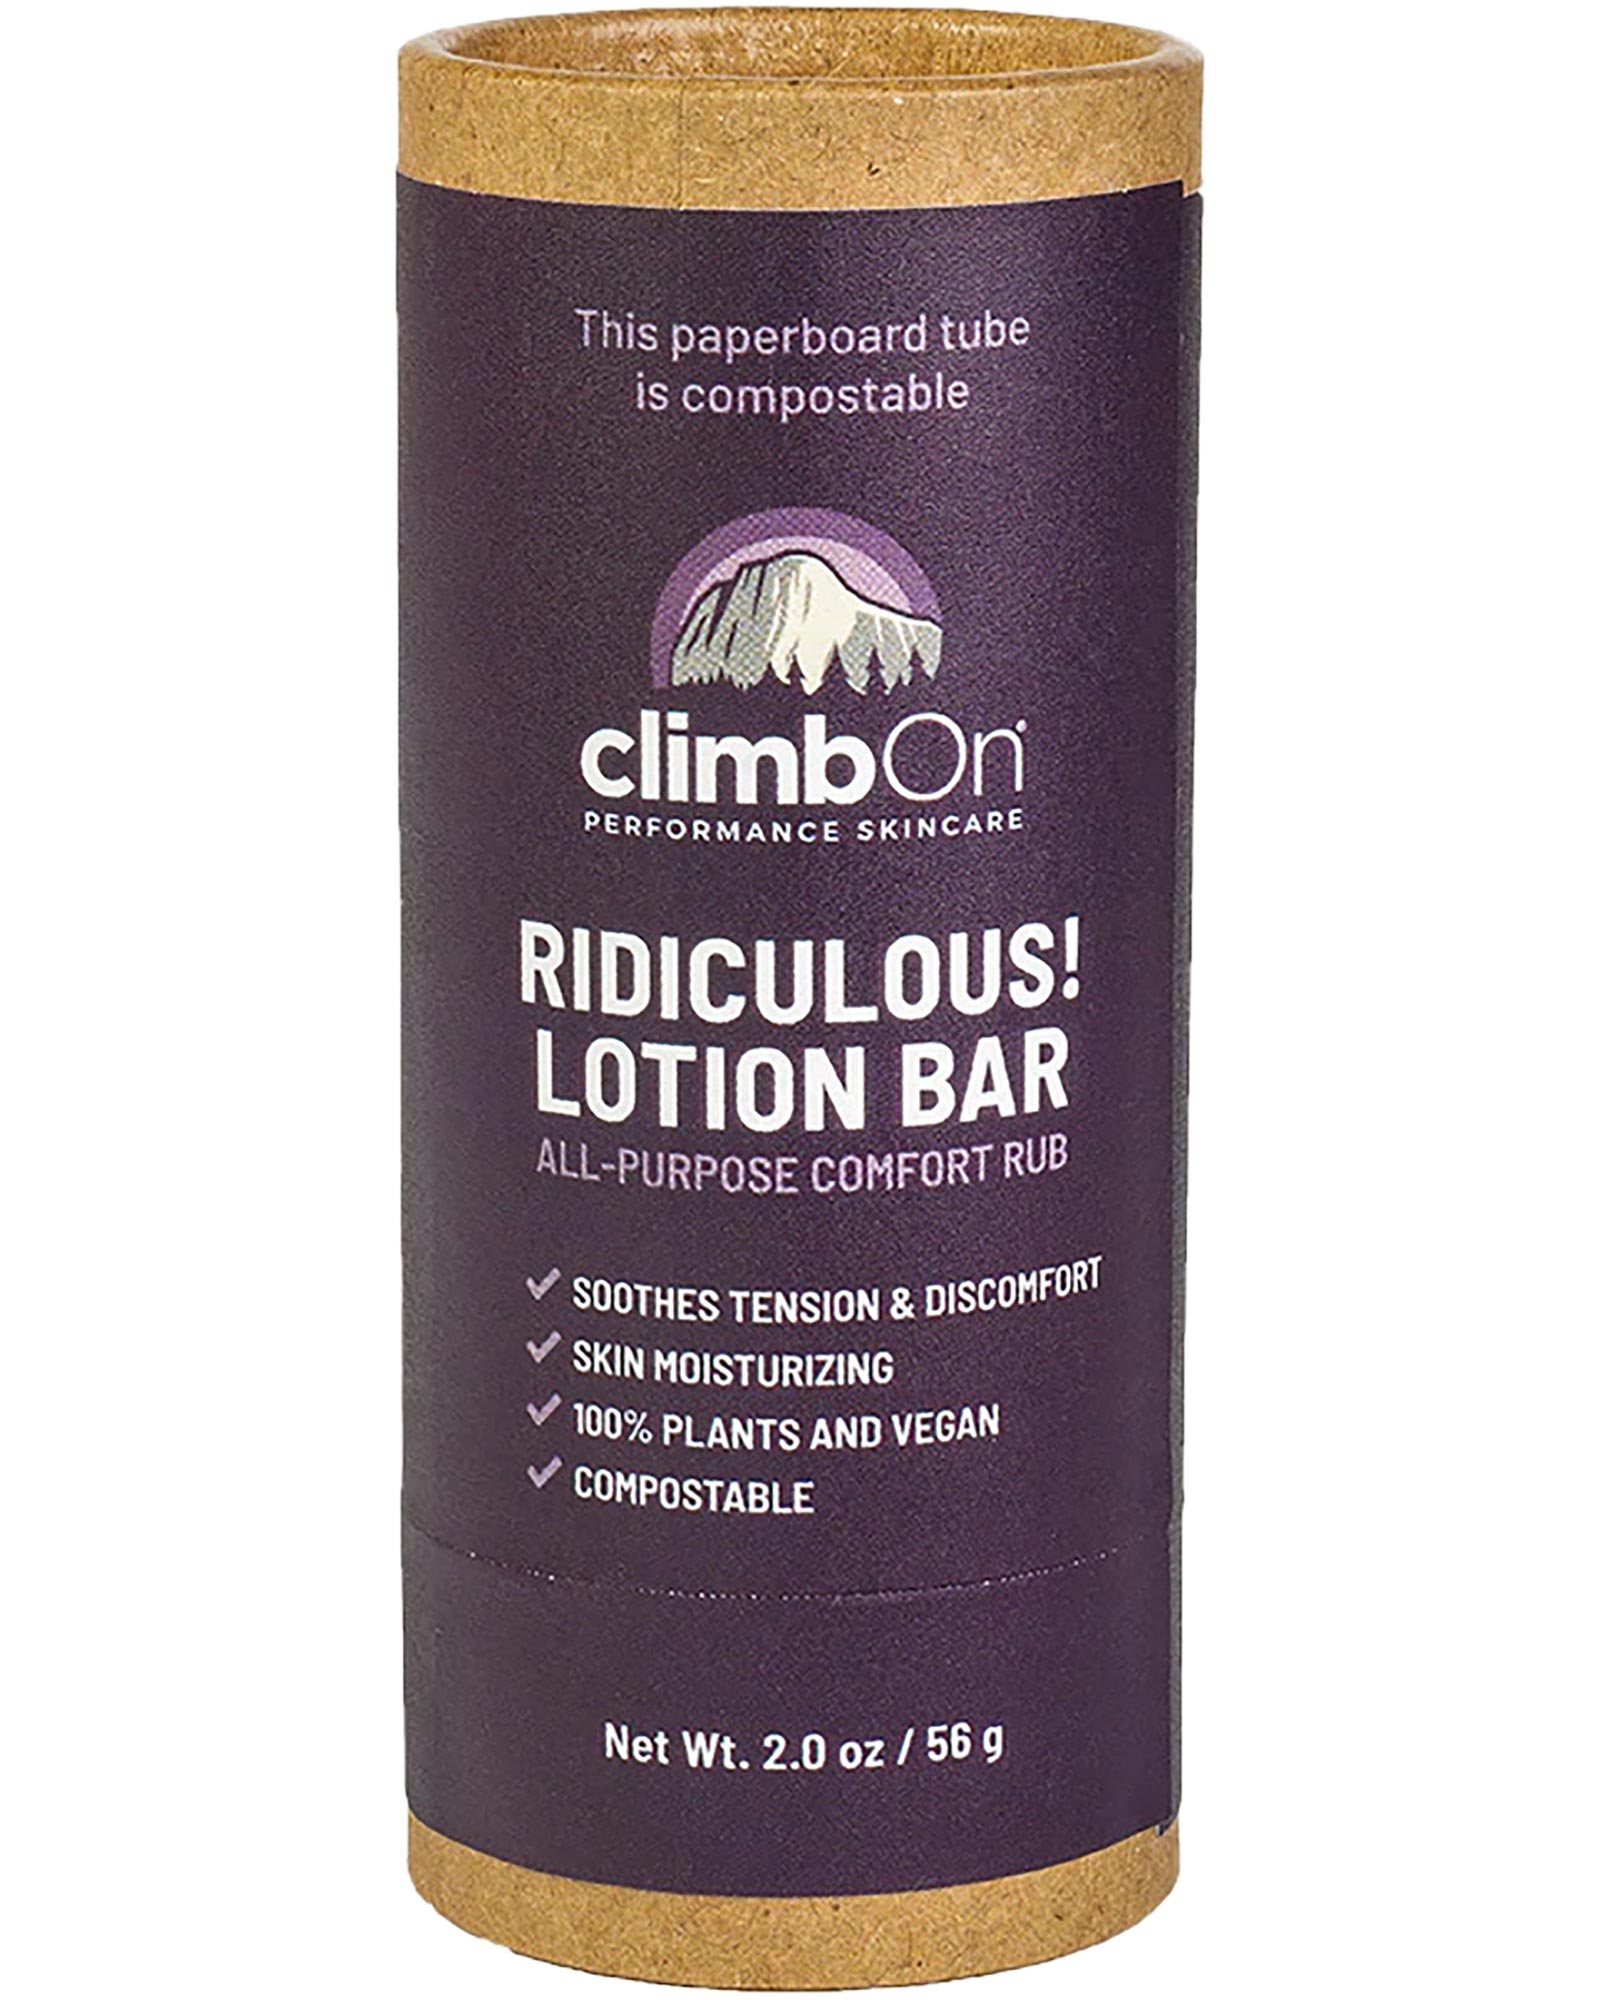 Climb On RIDICULOUS! Lotion Bar 2oz